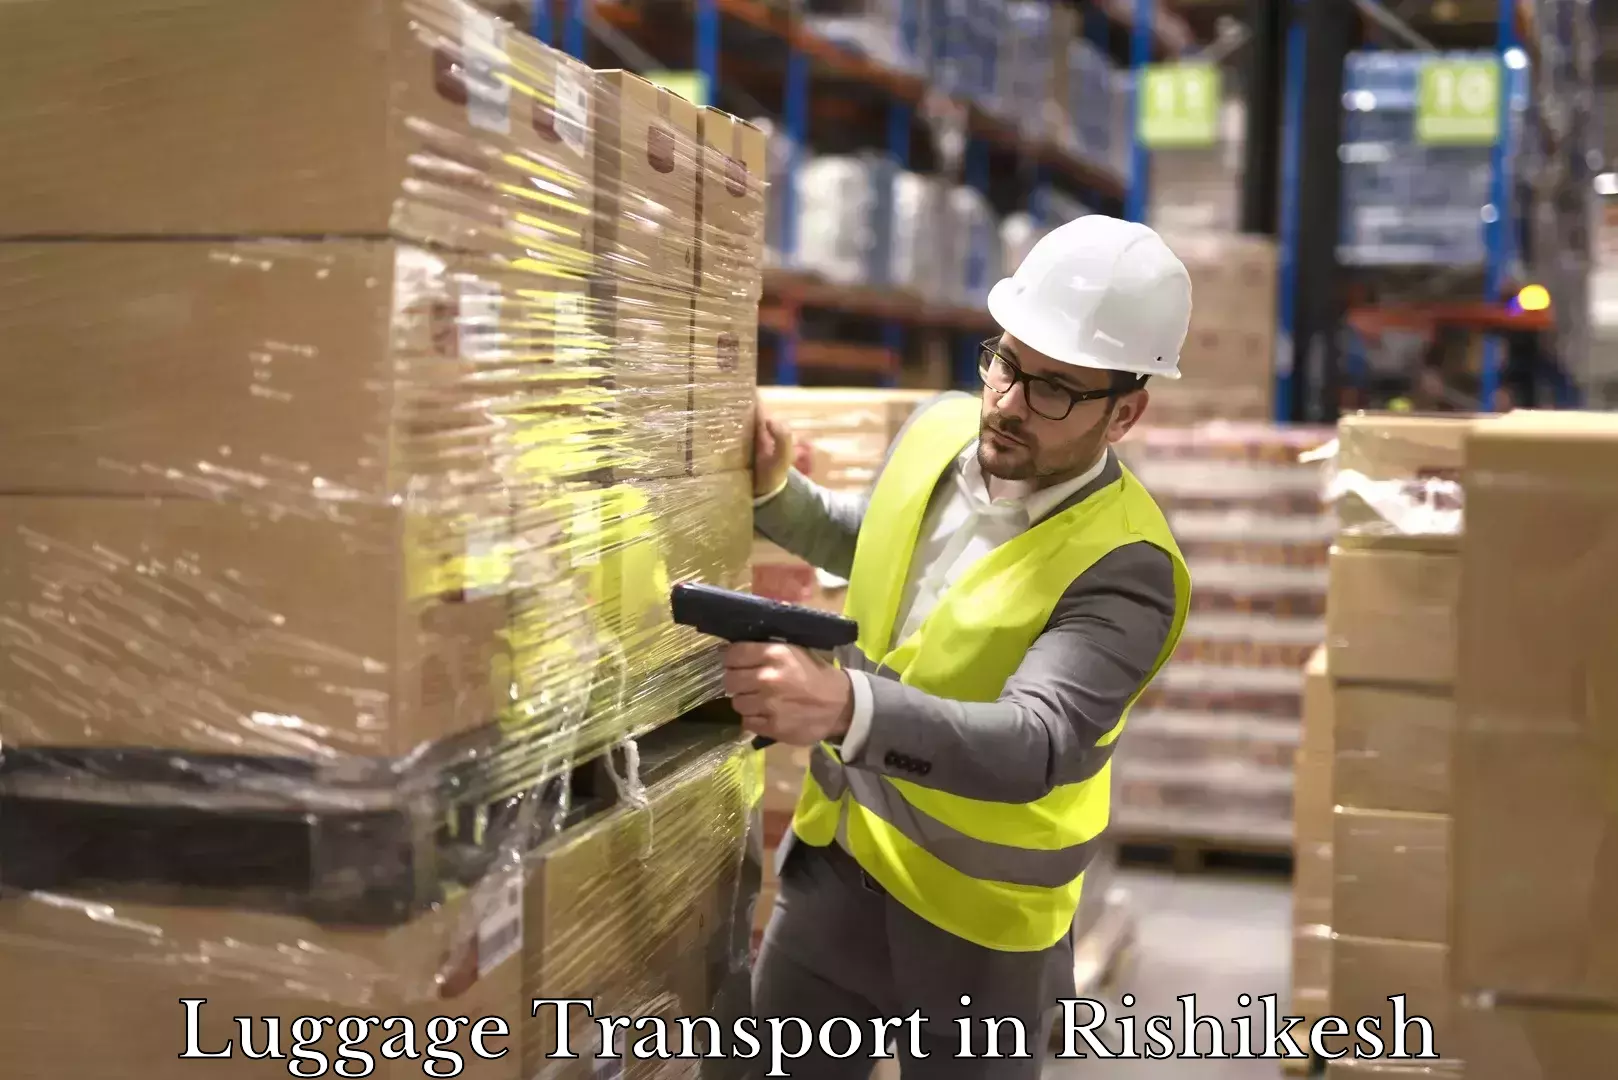 High-quality baggage shipment in Rishikesh